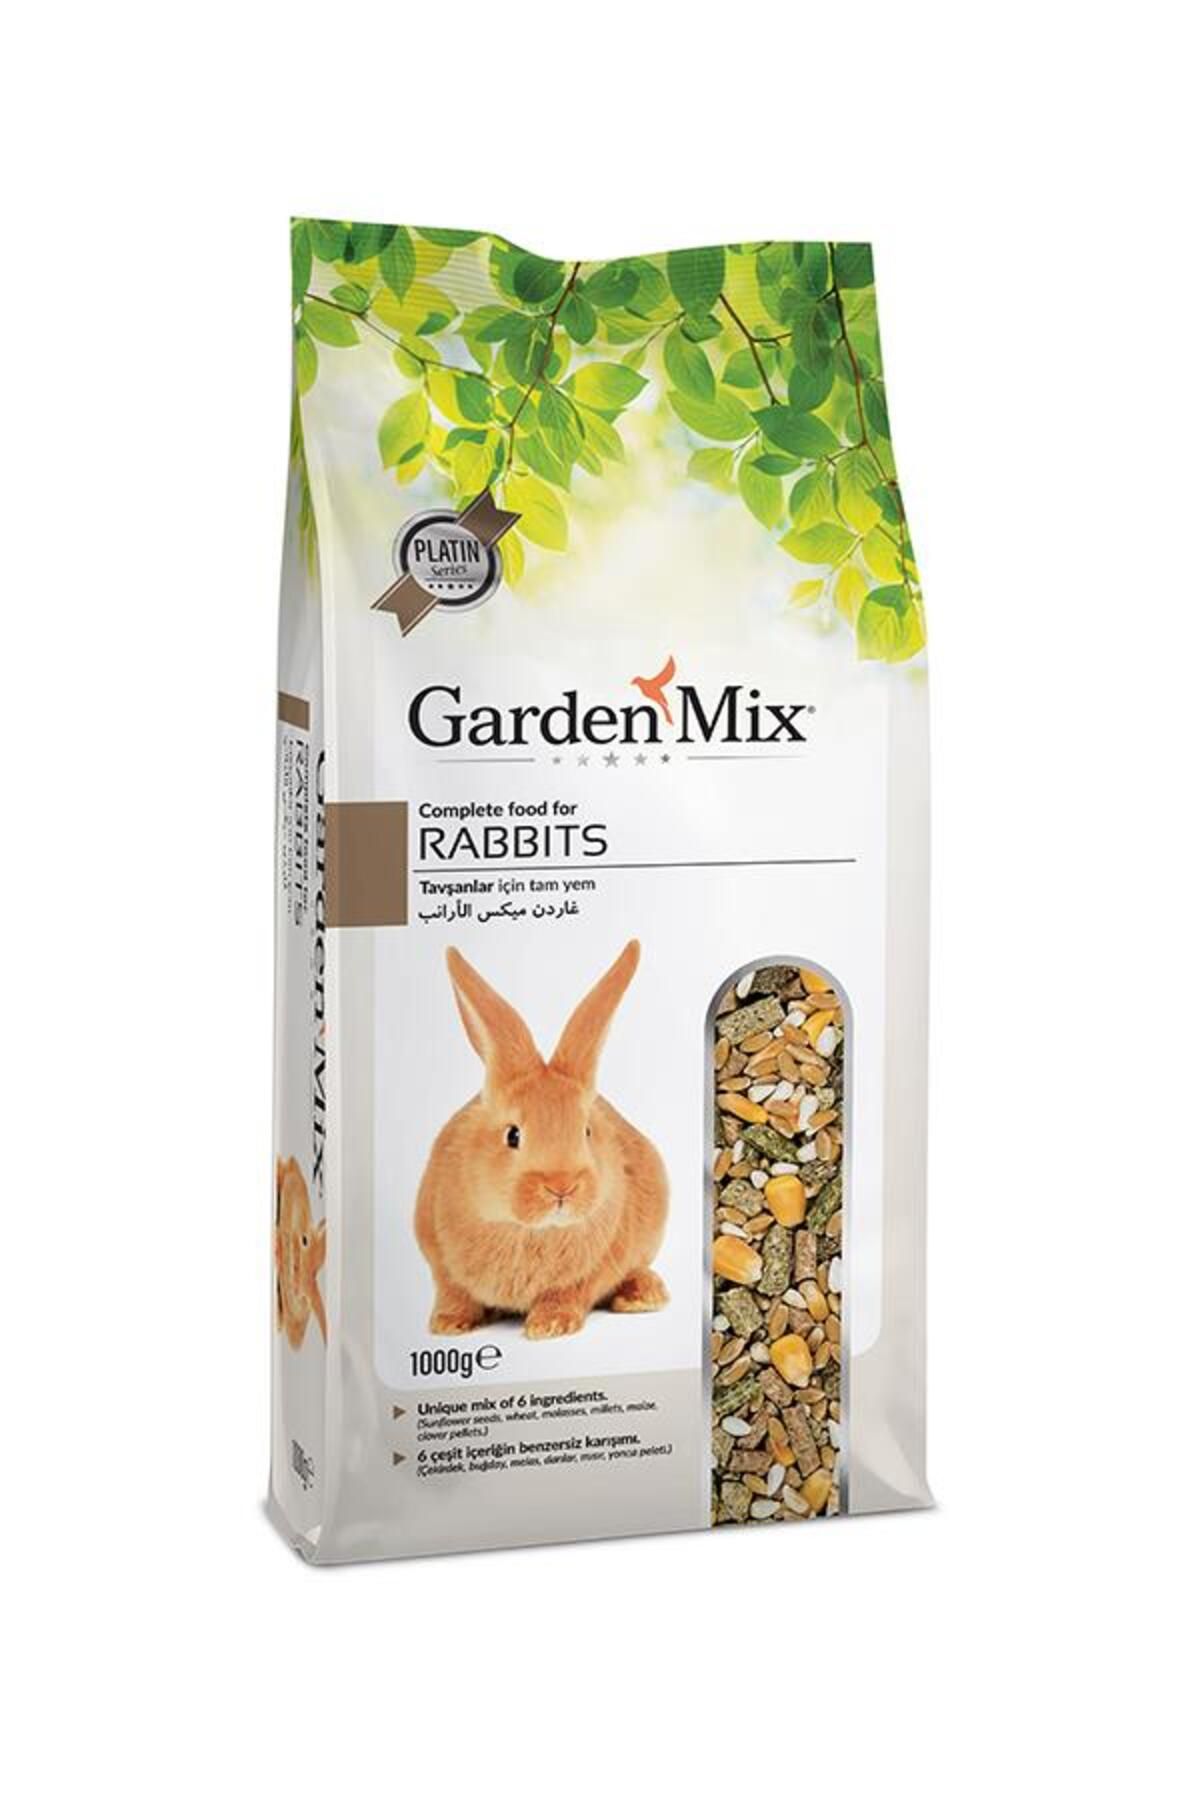 Gardenmix Platin Tavşan Yemi 1 Kg